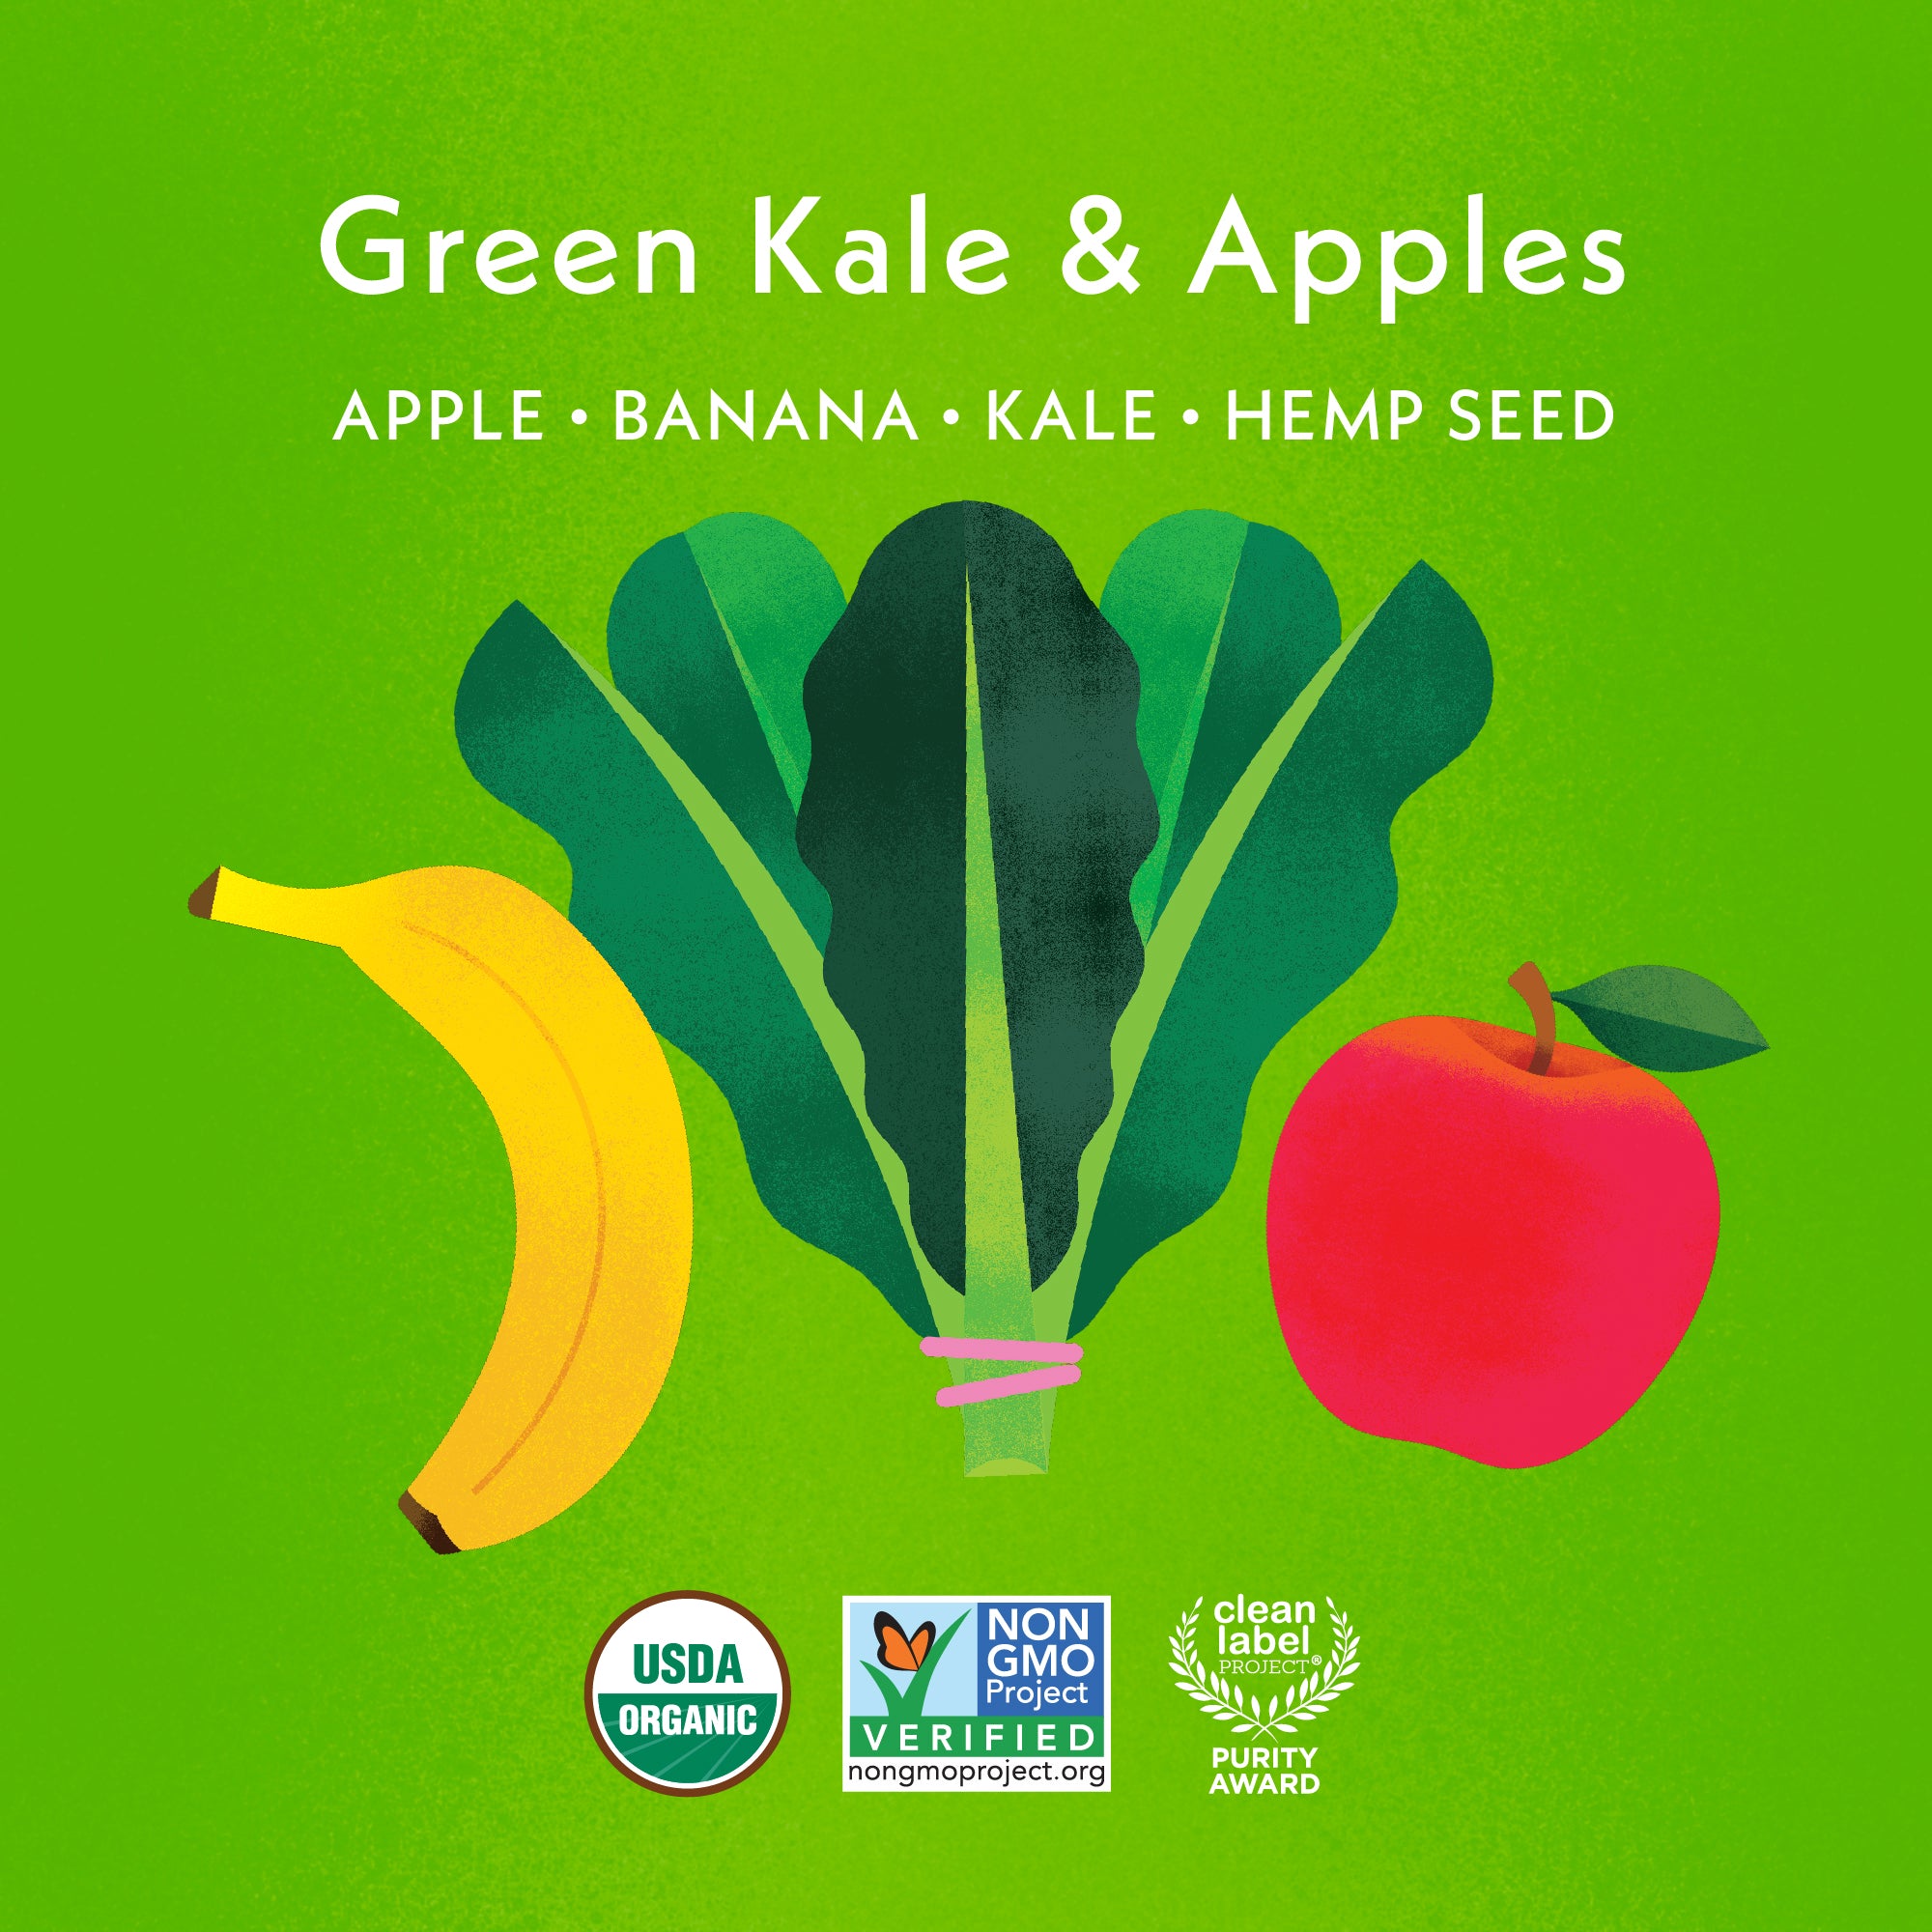 Green Kale & Apples